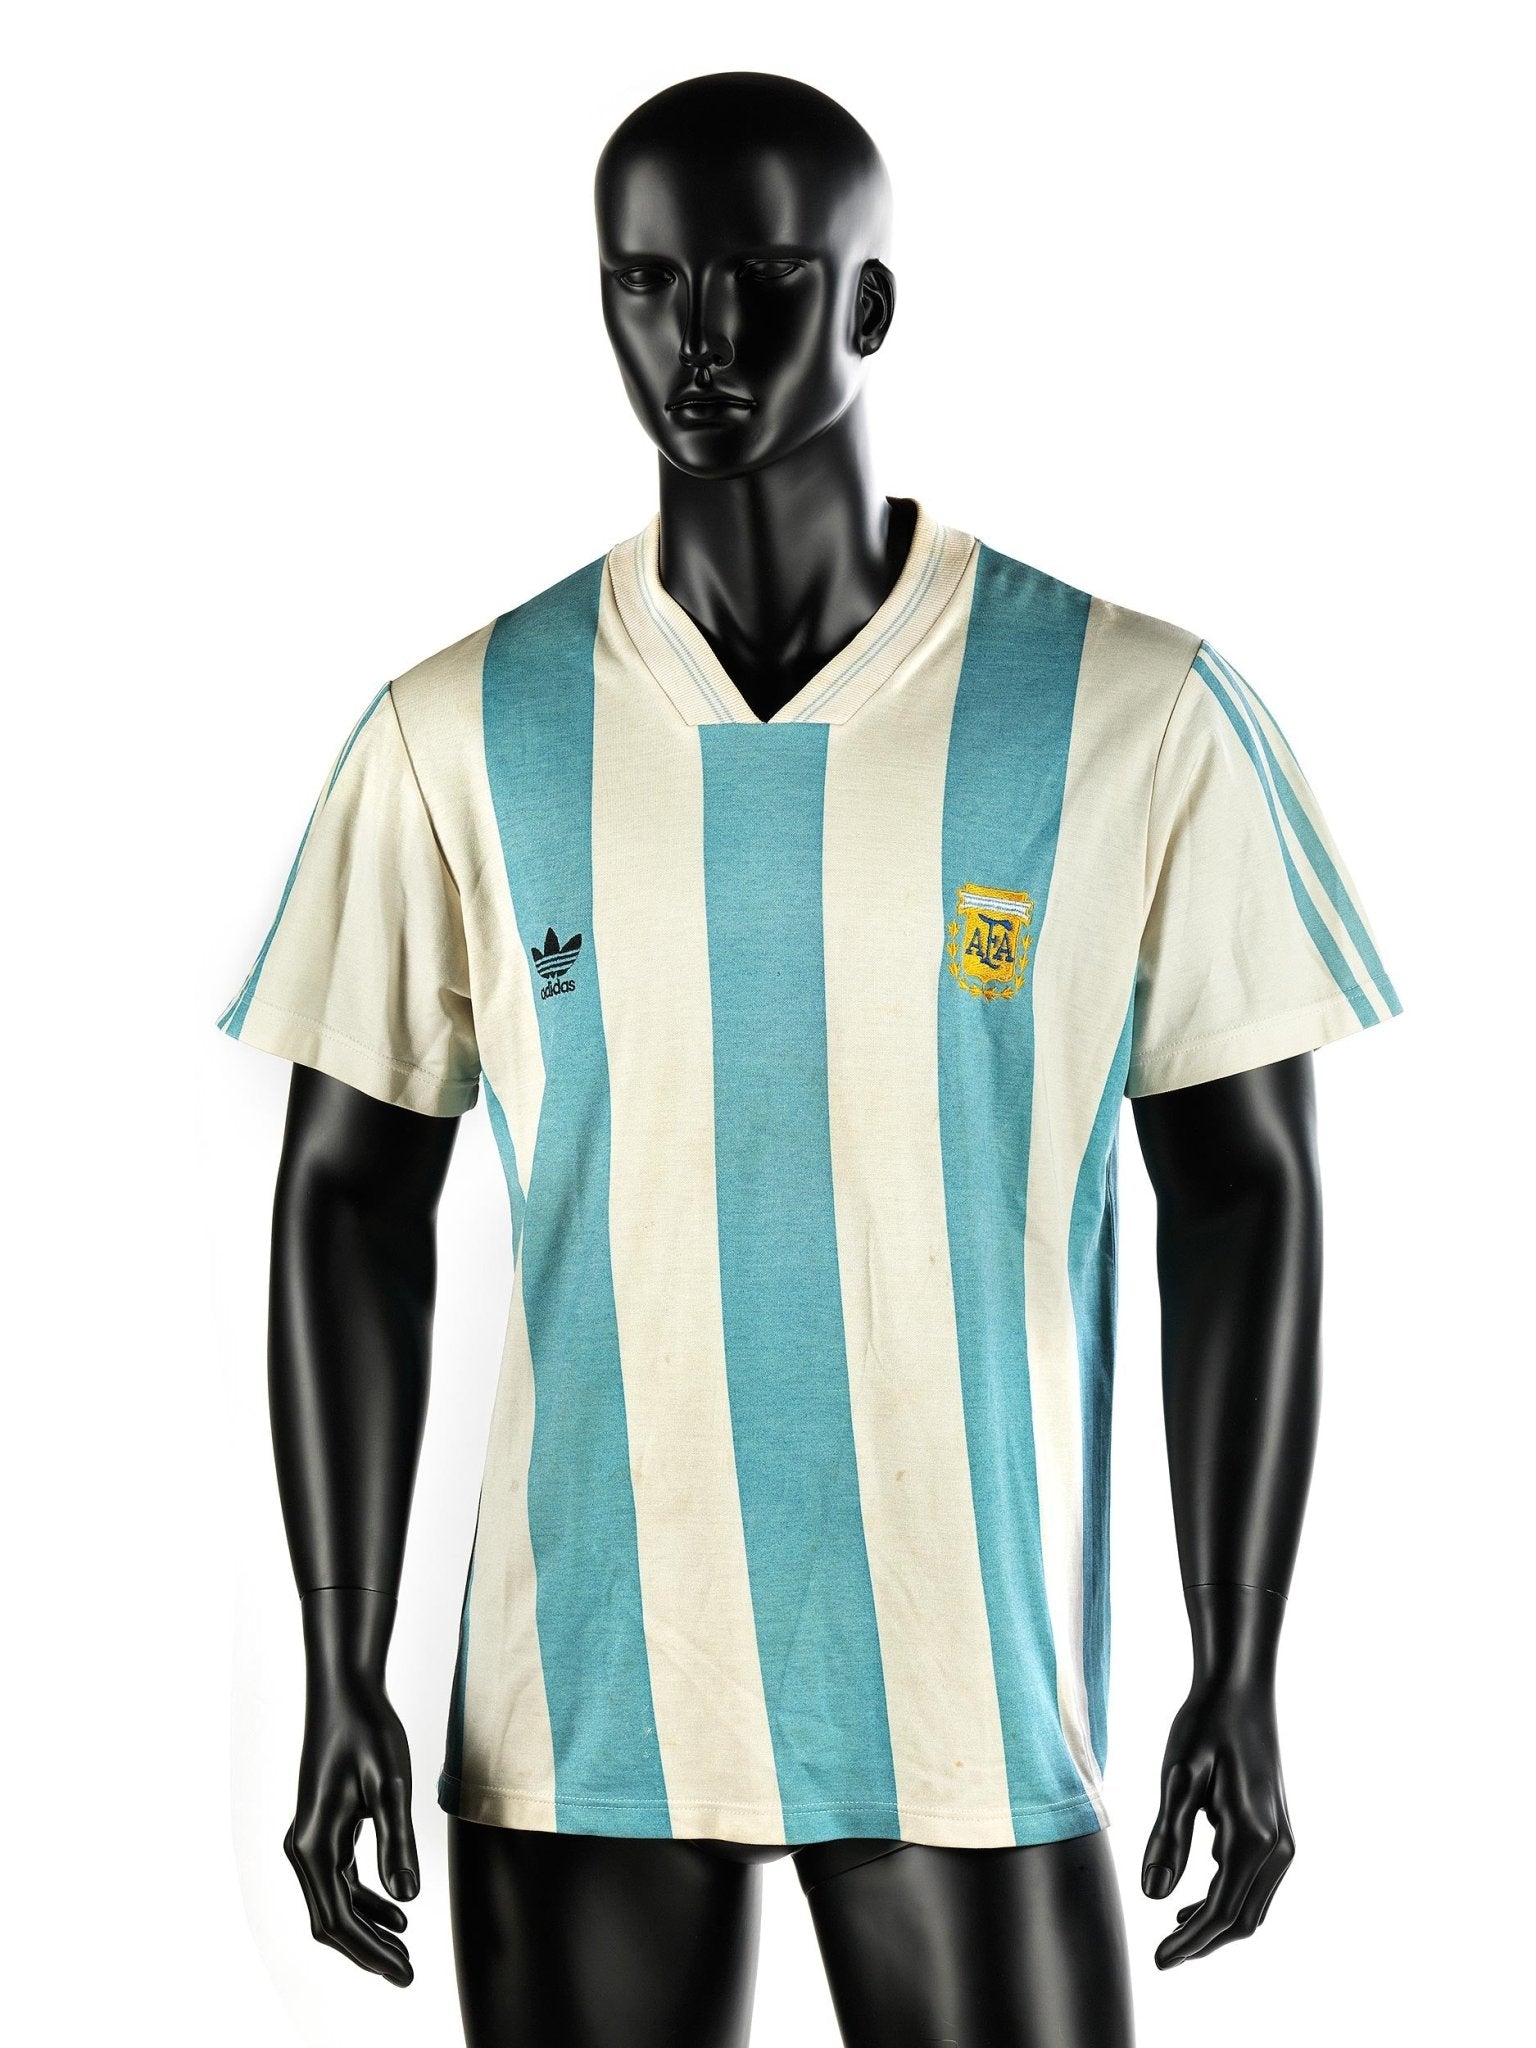 Diego Maradona shirt to auction for €40,000 at Hampel. – The Memorabilia  Club